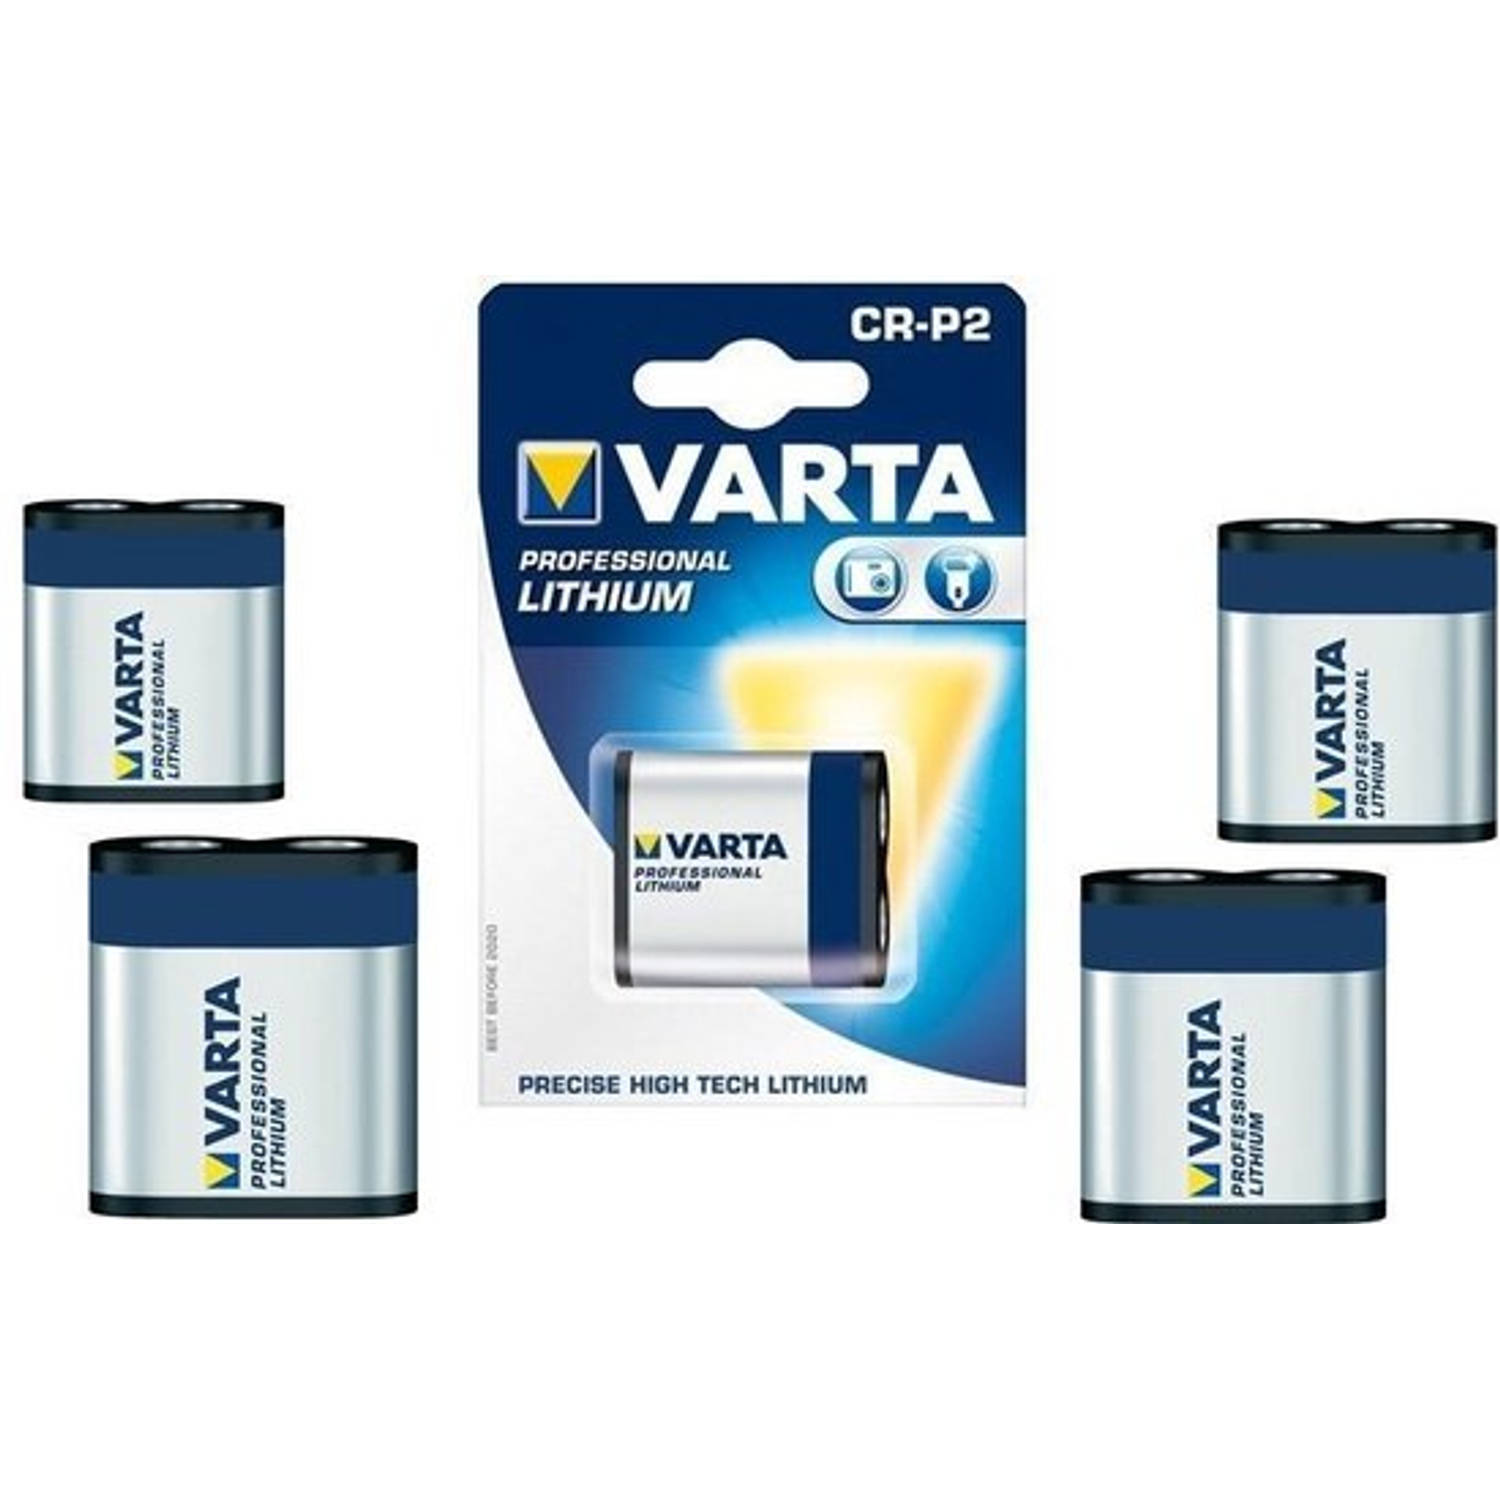 5 Stuks Varta Cr-p2 Professional Photo Lithium 6v 1600mah Batterij